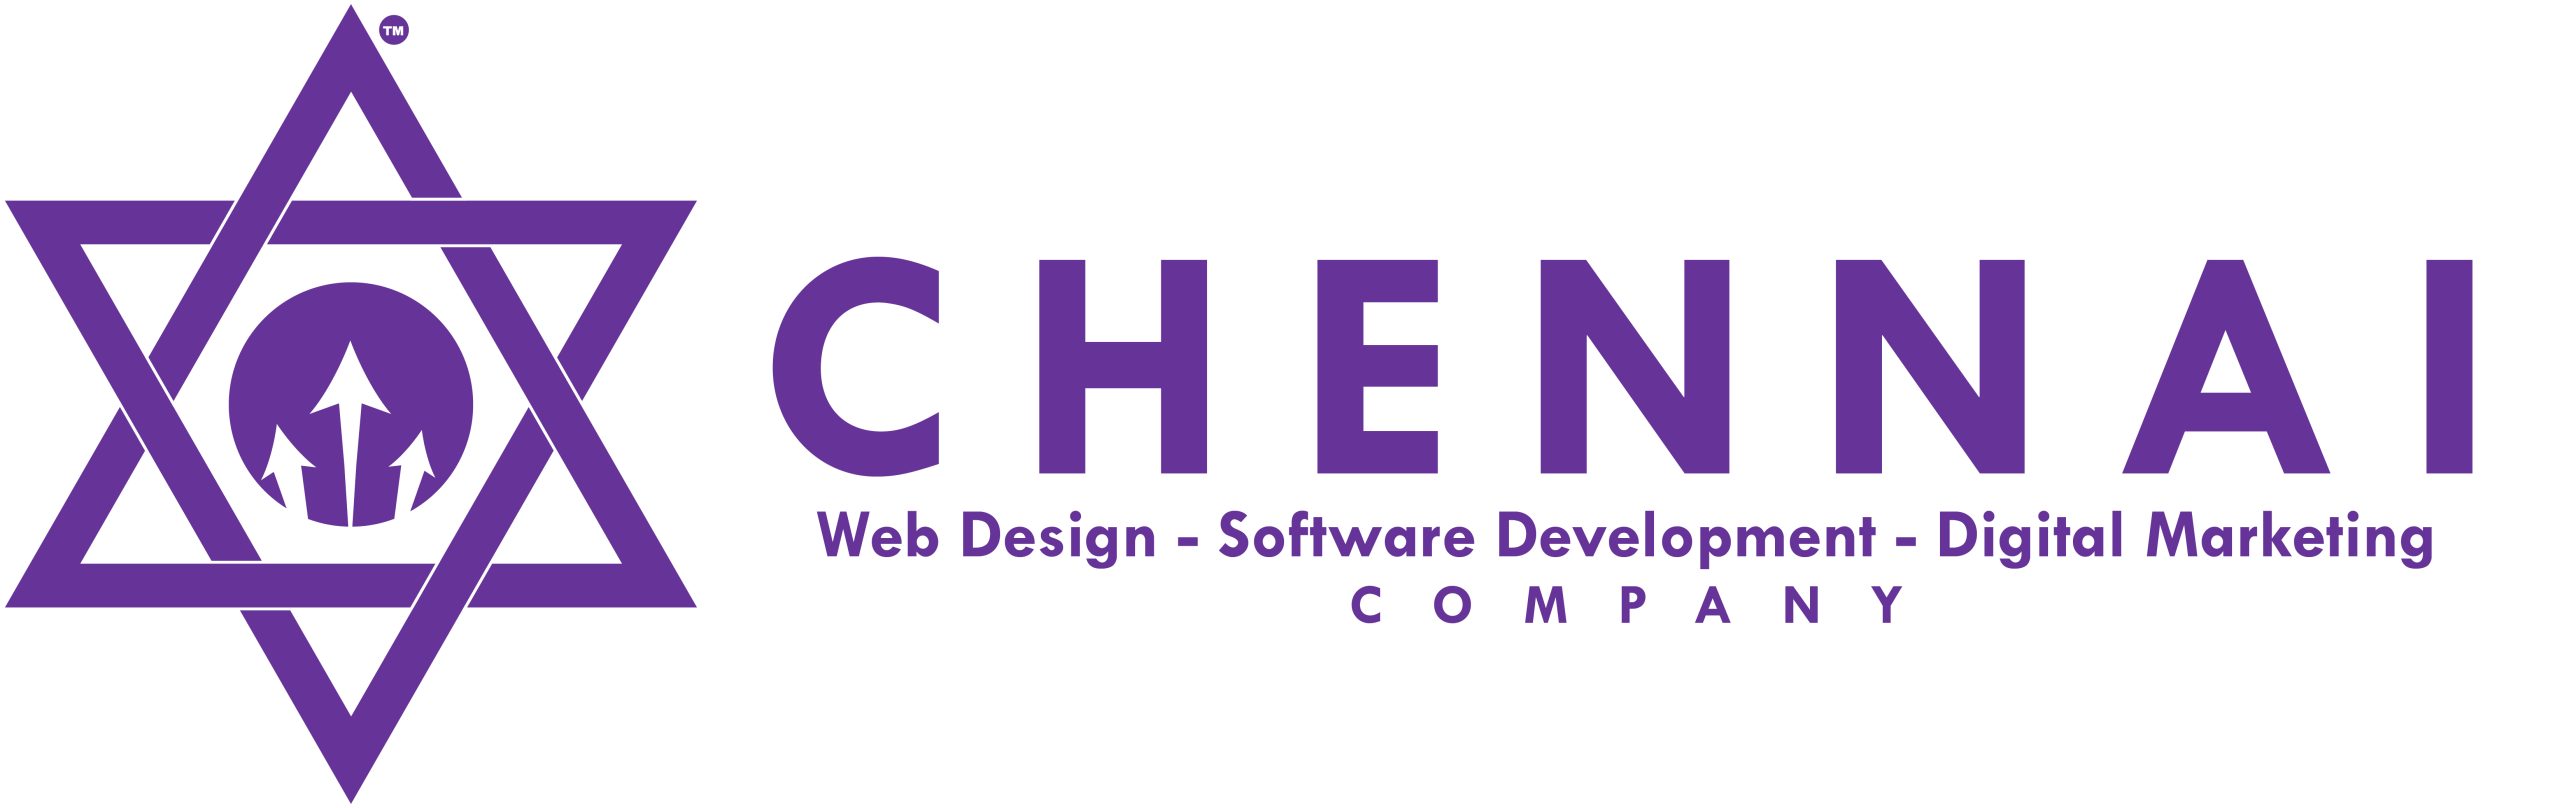 Chennai Software Development Company logo